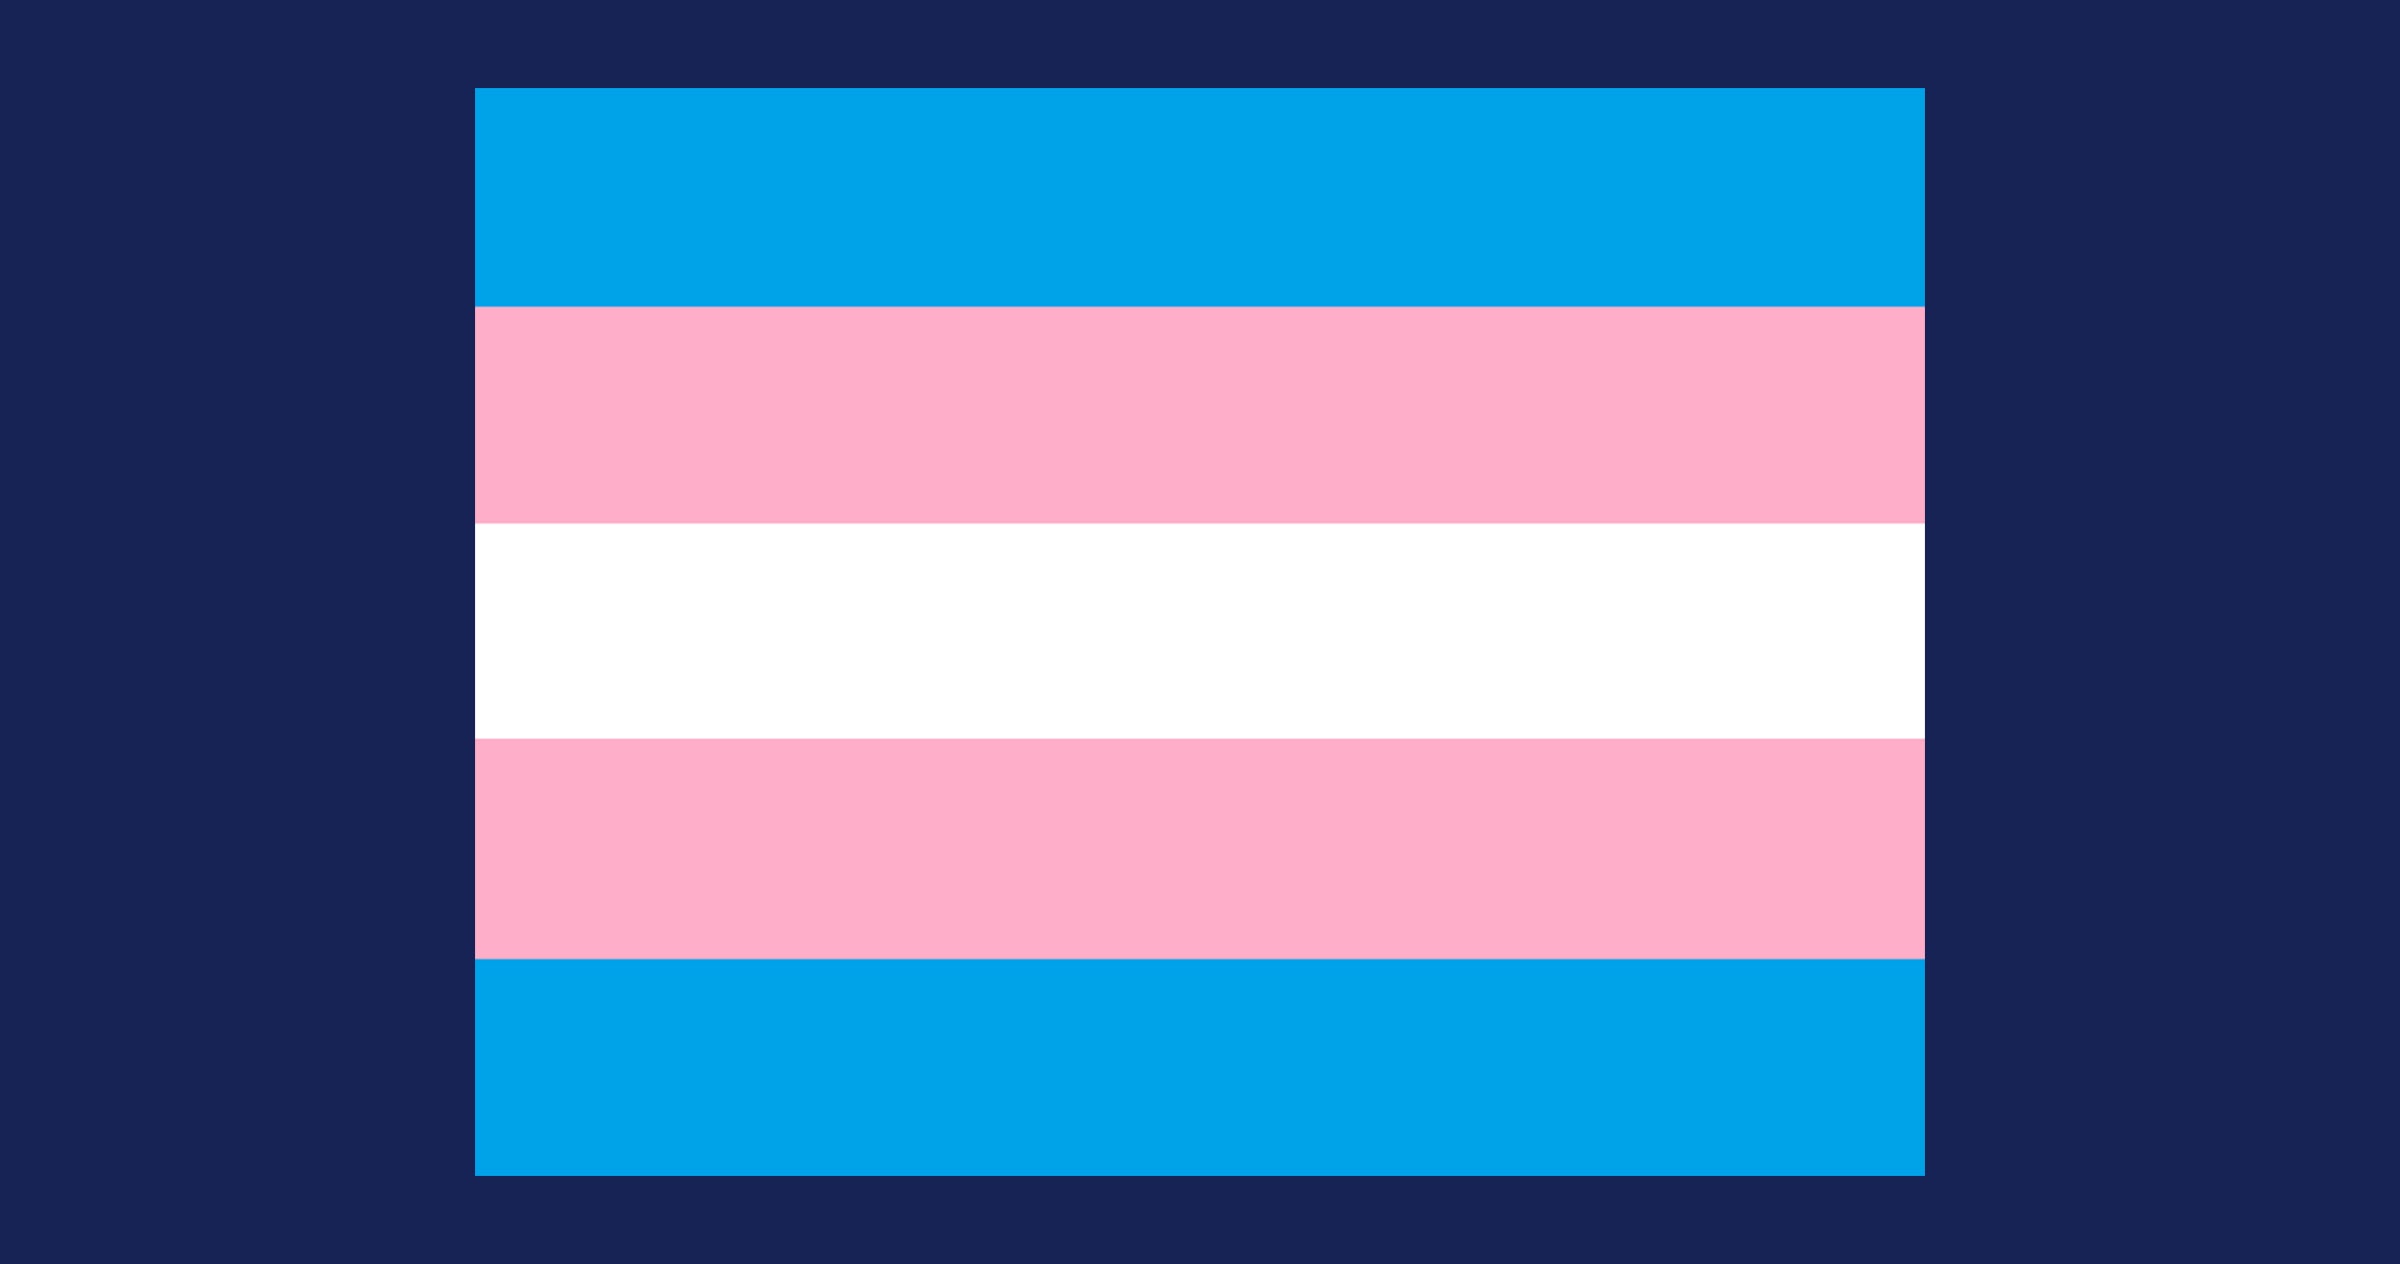 Transgender Pride Socks, Trans Flag Colors